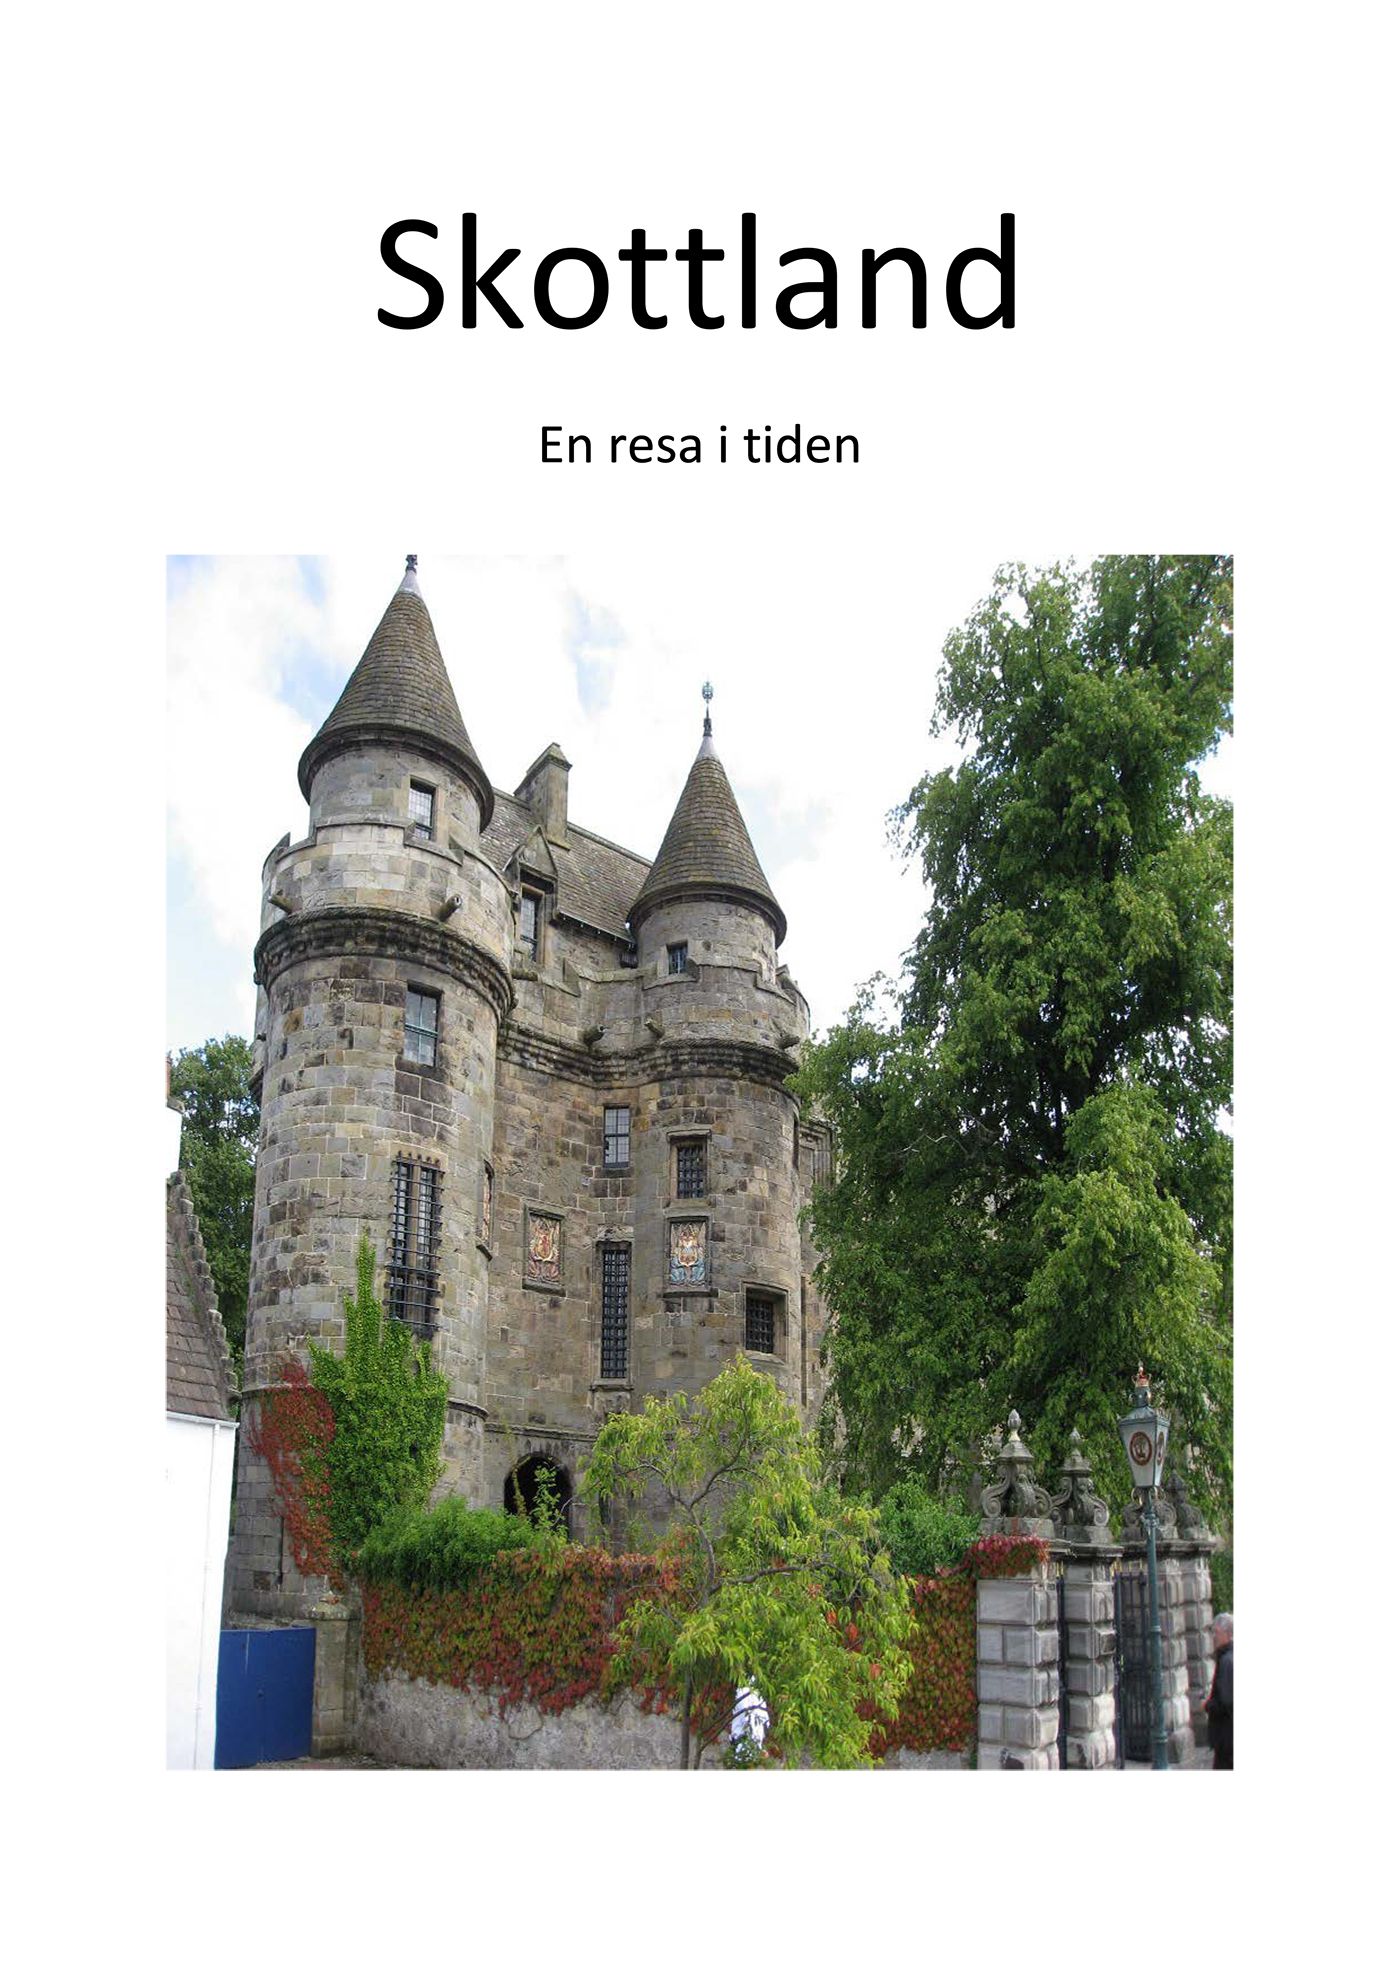 Skottland - En resa i tiden, eBook by Curt Jonsson